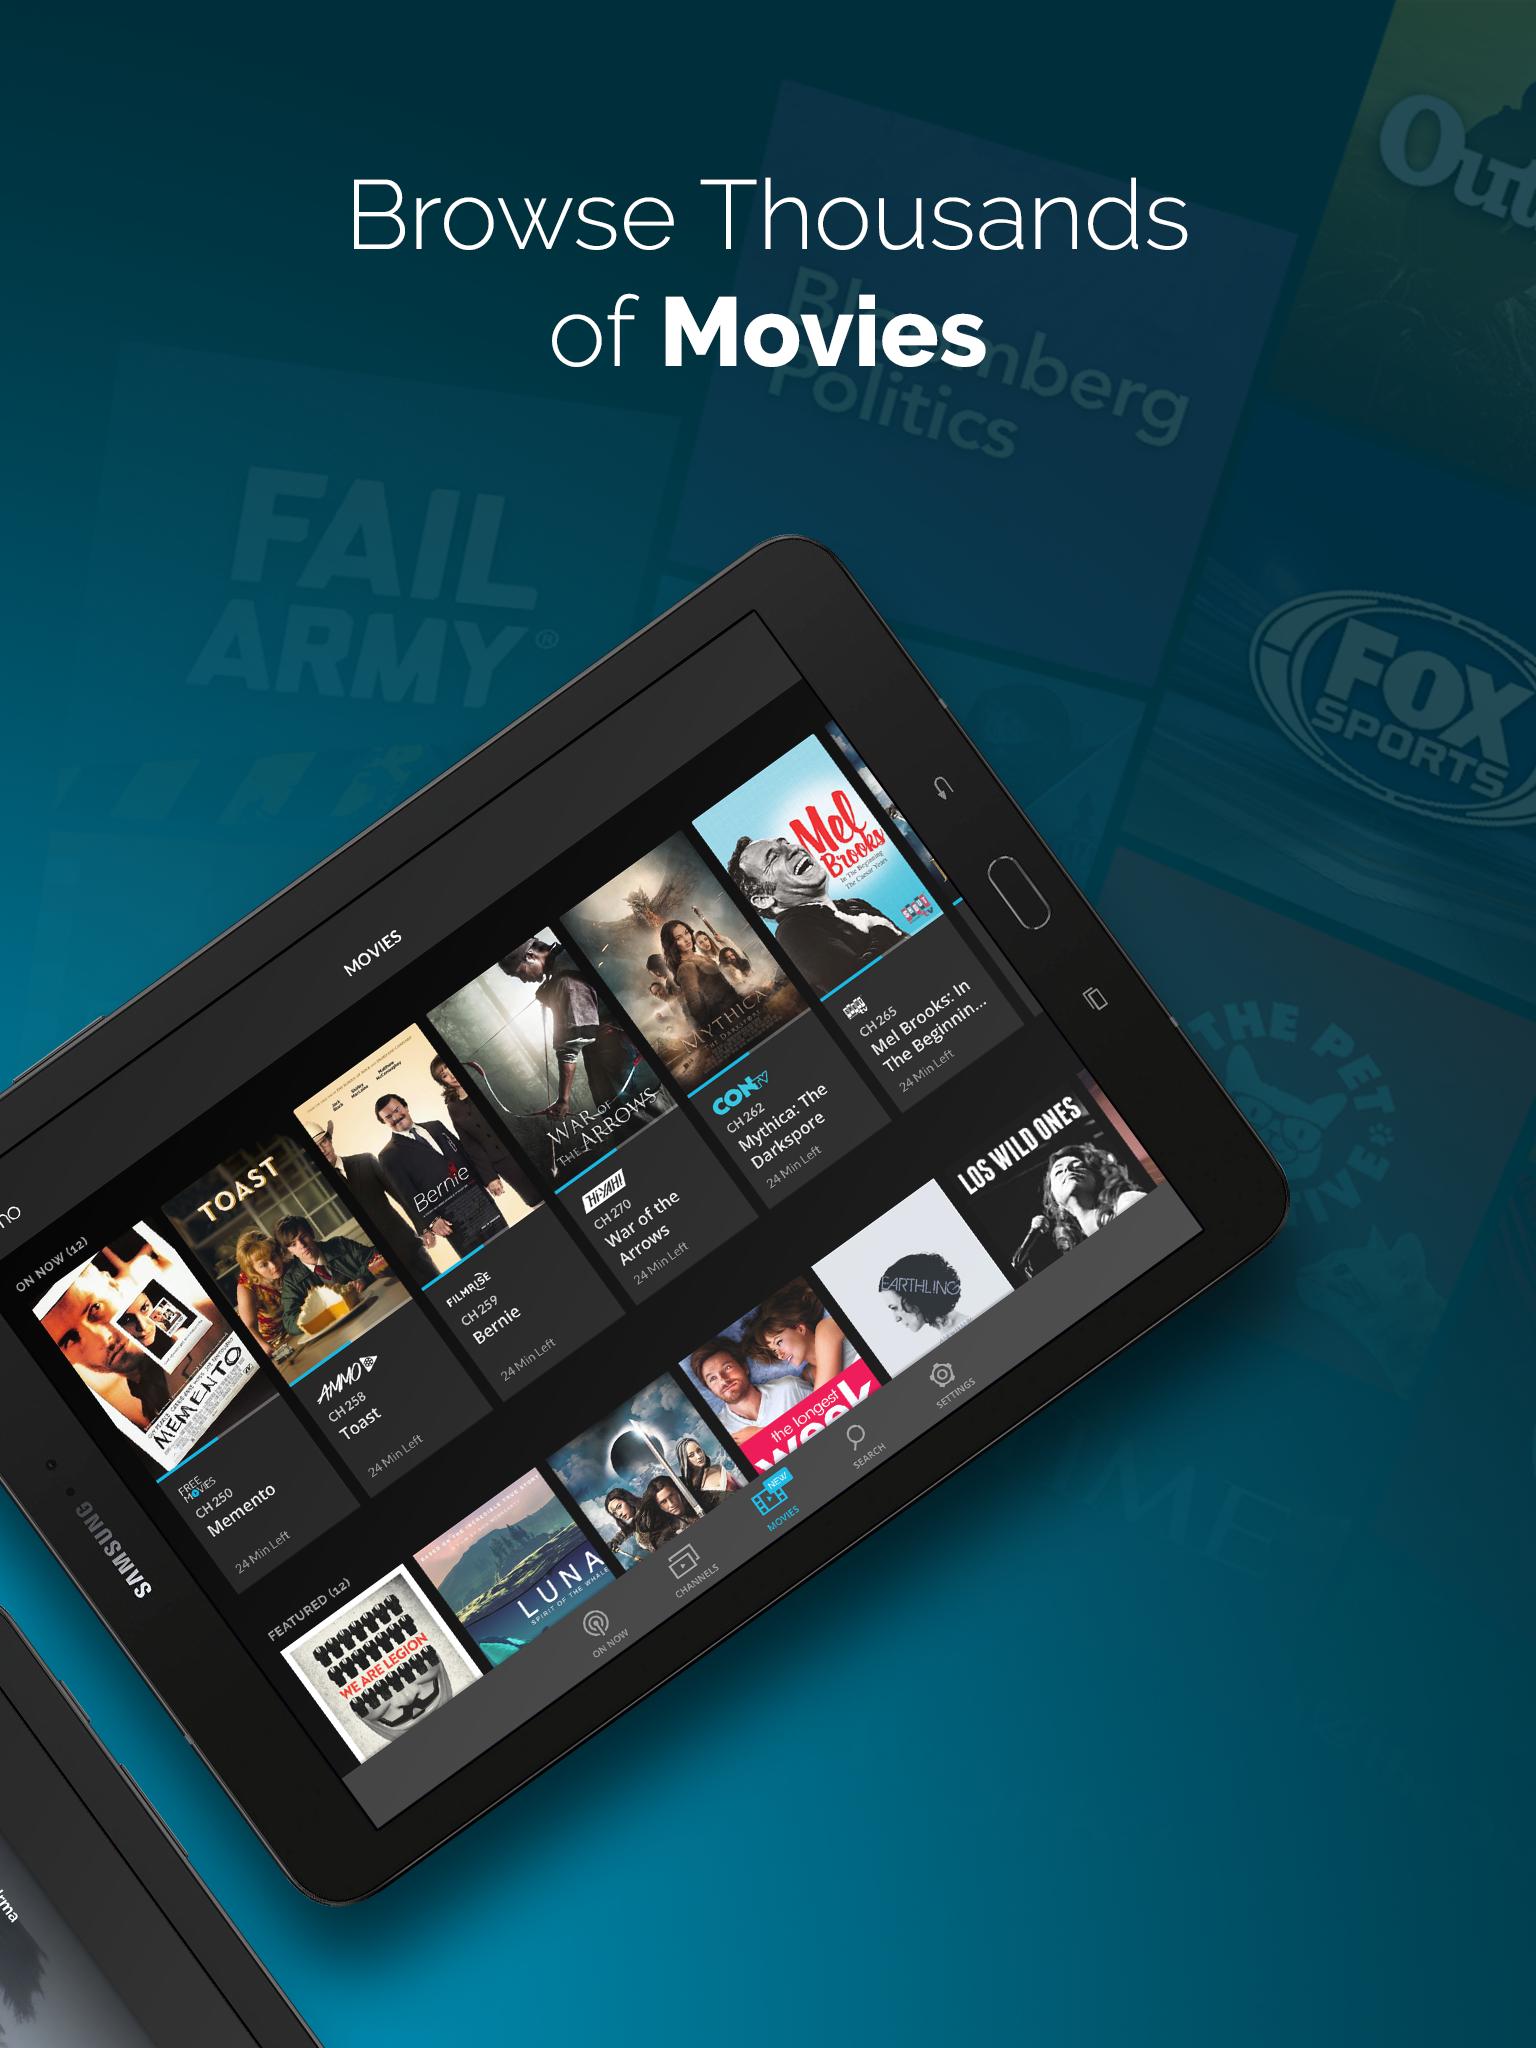 XUMO Free Streaming TV Shows and Movies 2.7.75 Screenshot 12